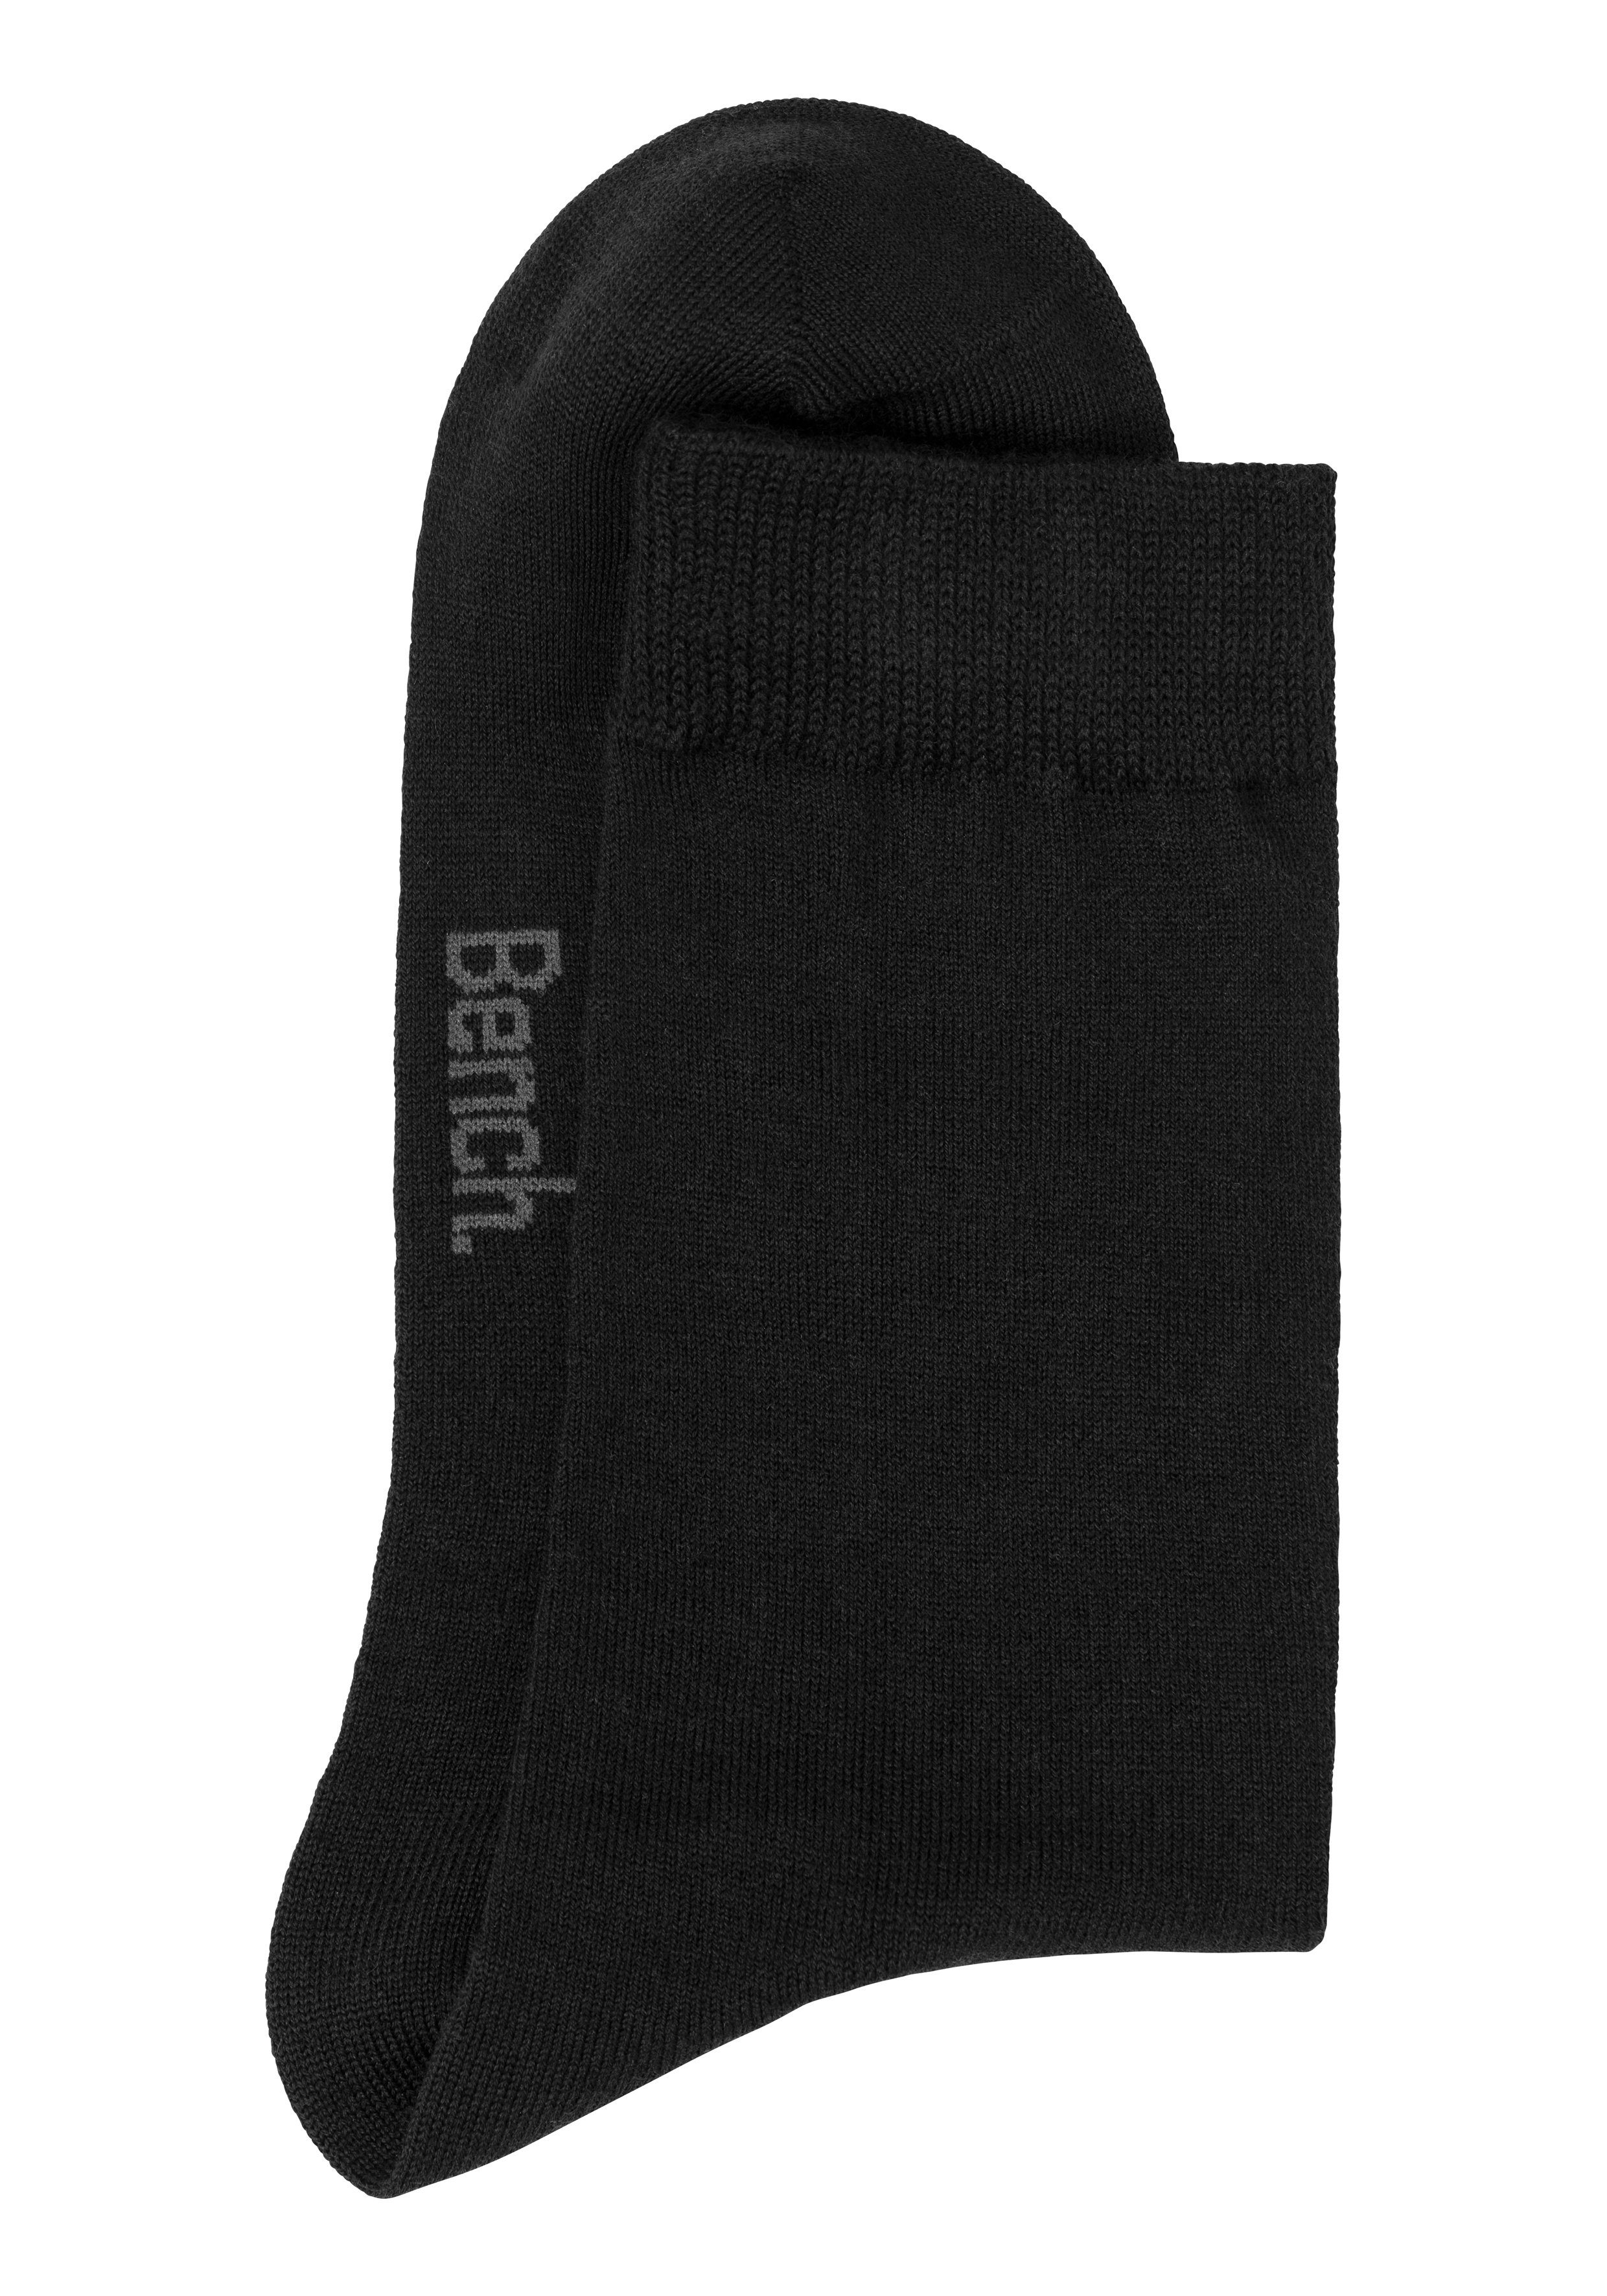 Bench. Socken (3-Paar) Wollsocken aus 53% Material Wolle flauschigem mit